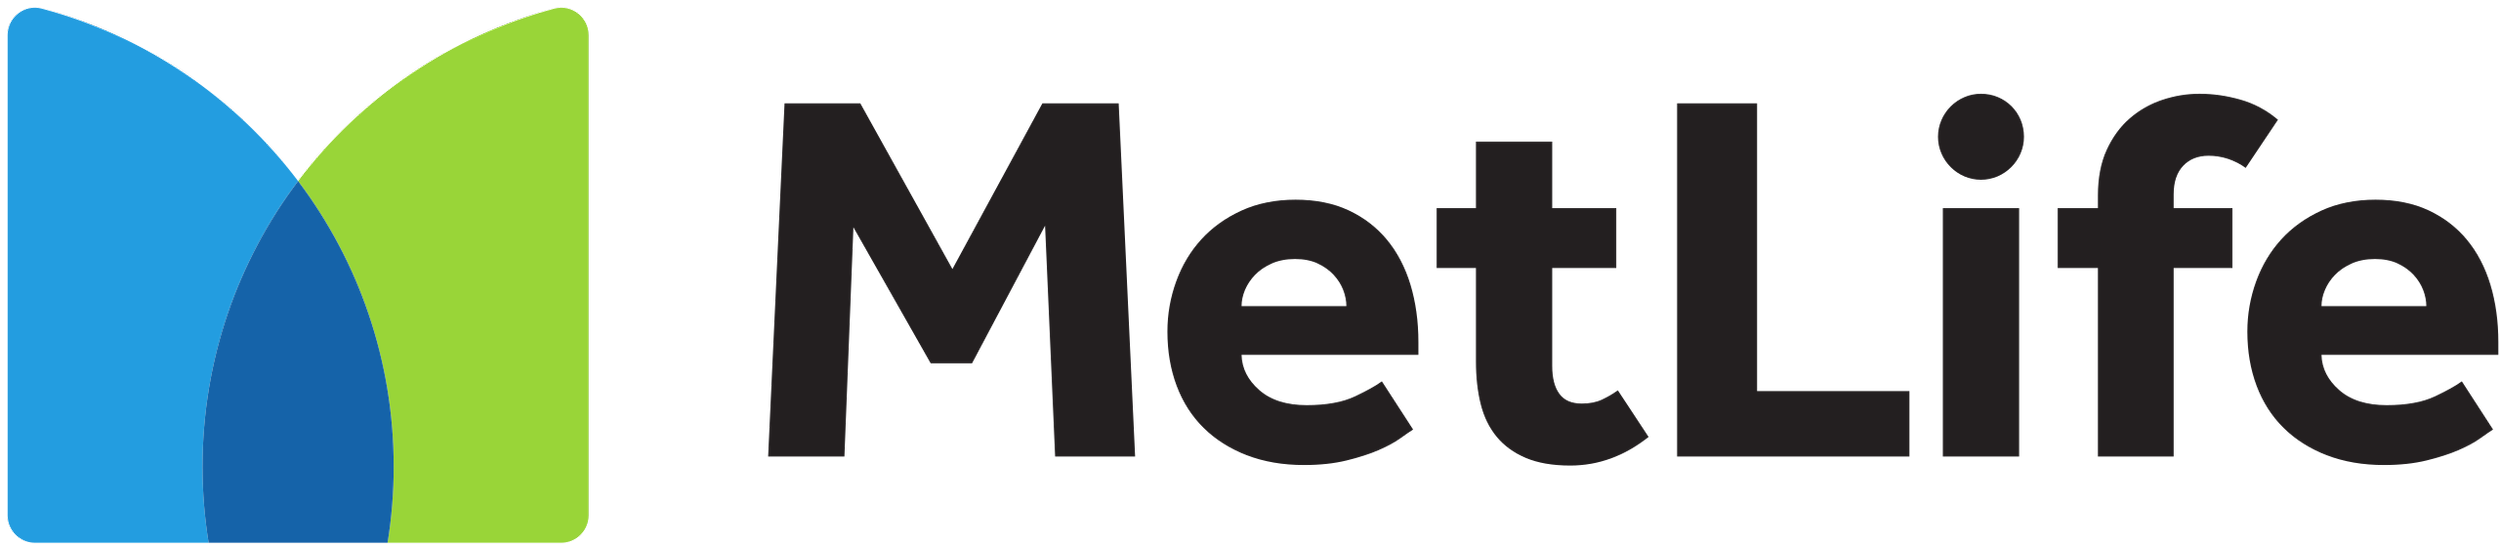 MetLife_logo.png